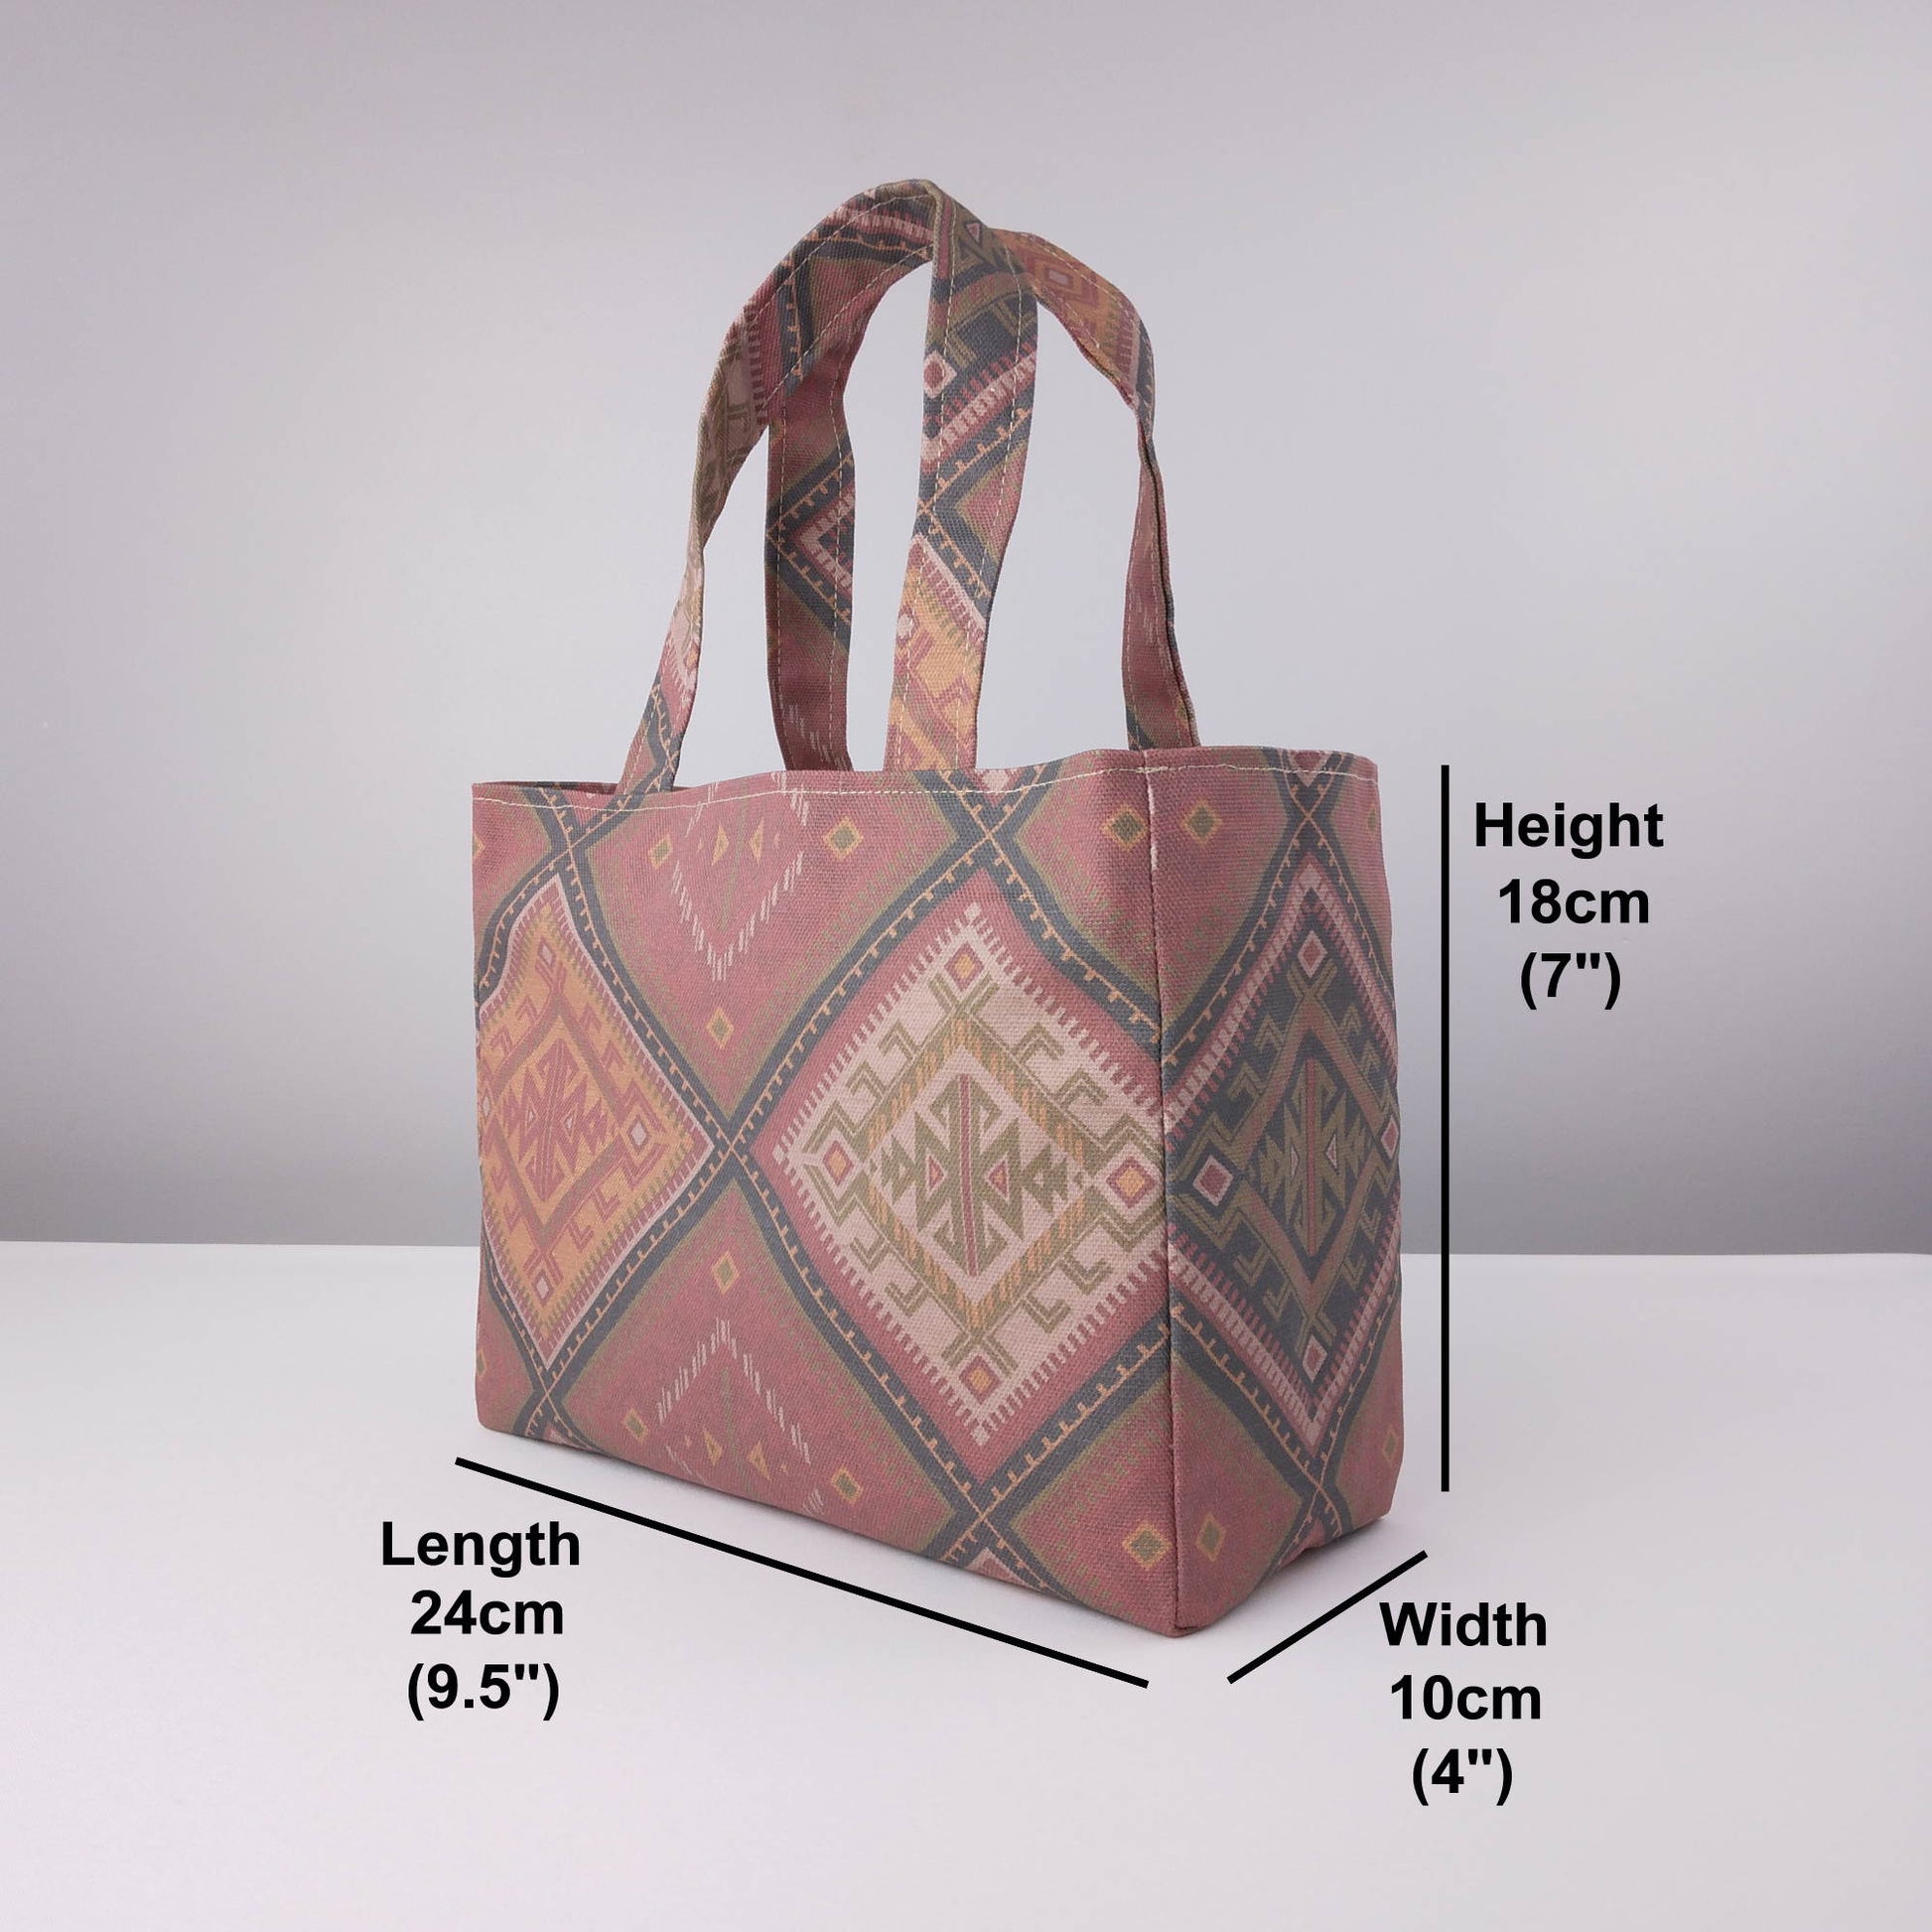 Mini tote bag with red, orange, and beige diamond kilim pattern